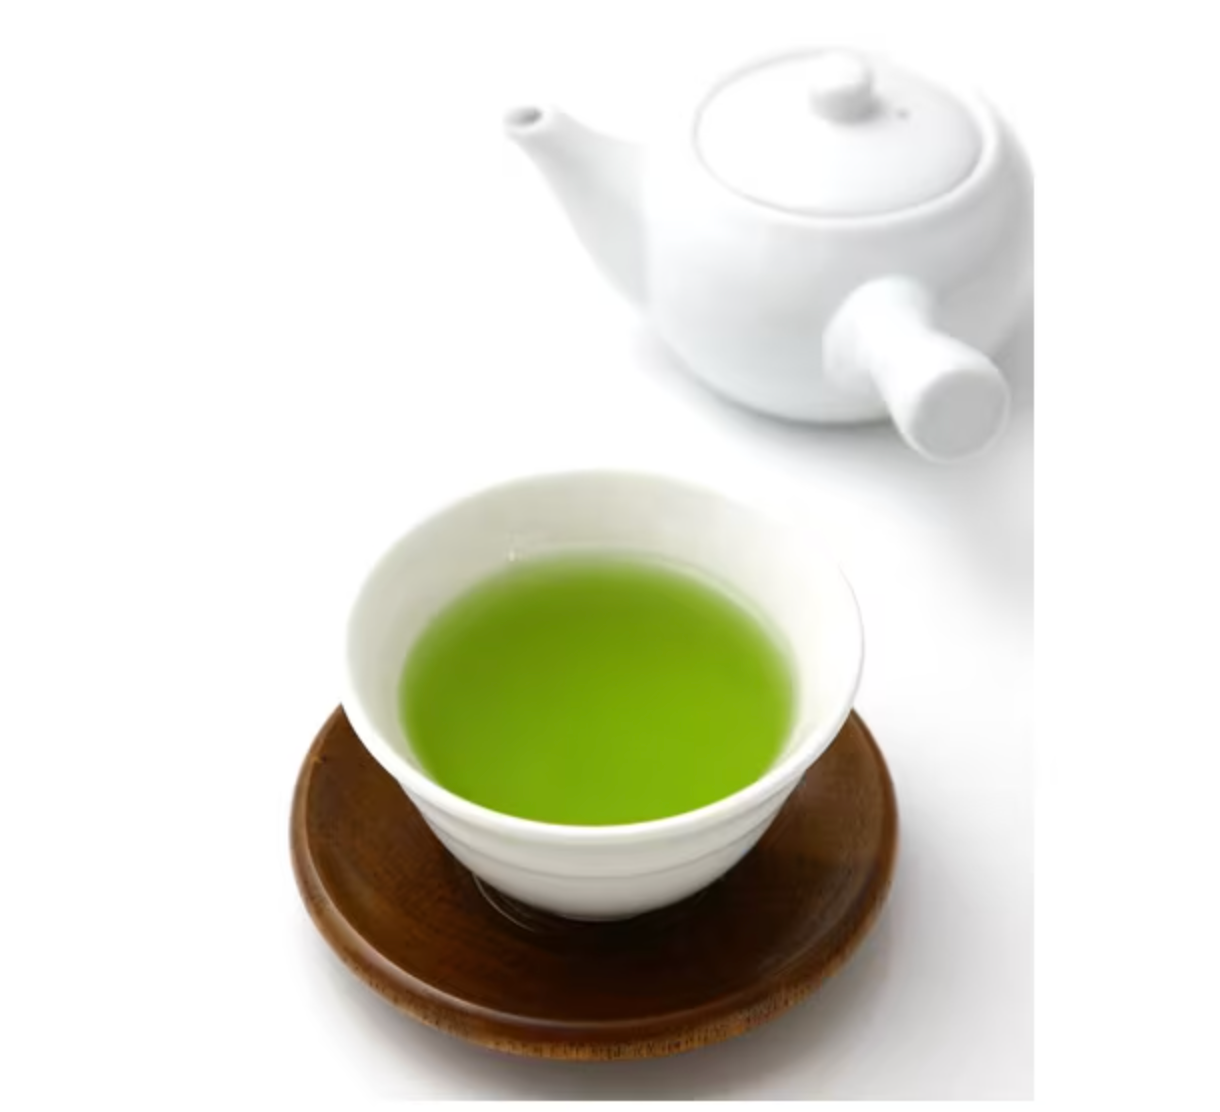 Ochanomaruko Shizuoka fresh tea aroma powder tea 200g